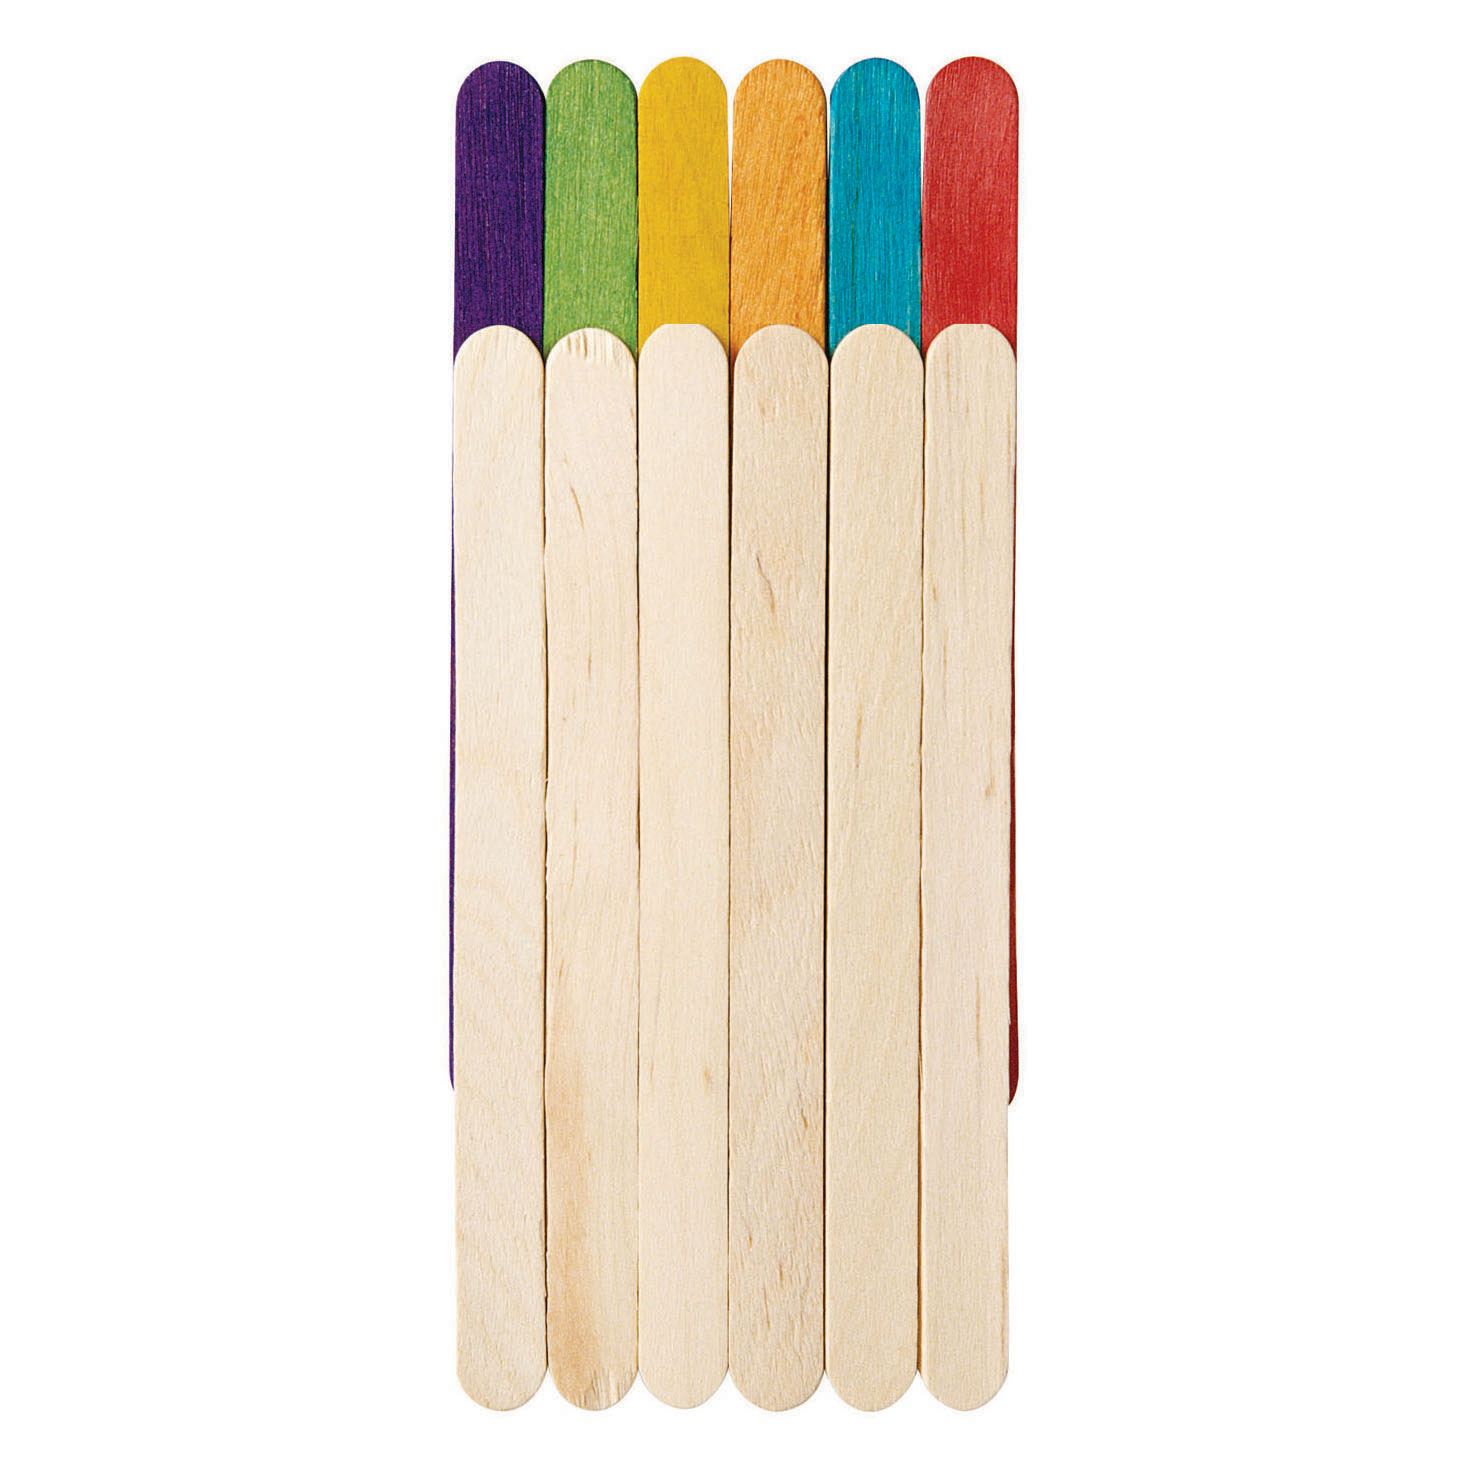 Colorations - Farbige Bastelstäbchen aus Holz, 1000 Stk.